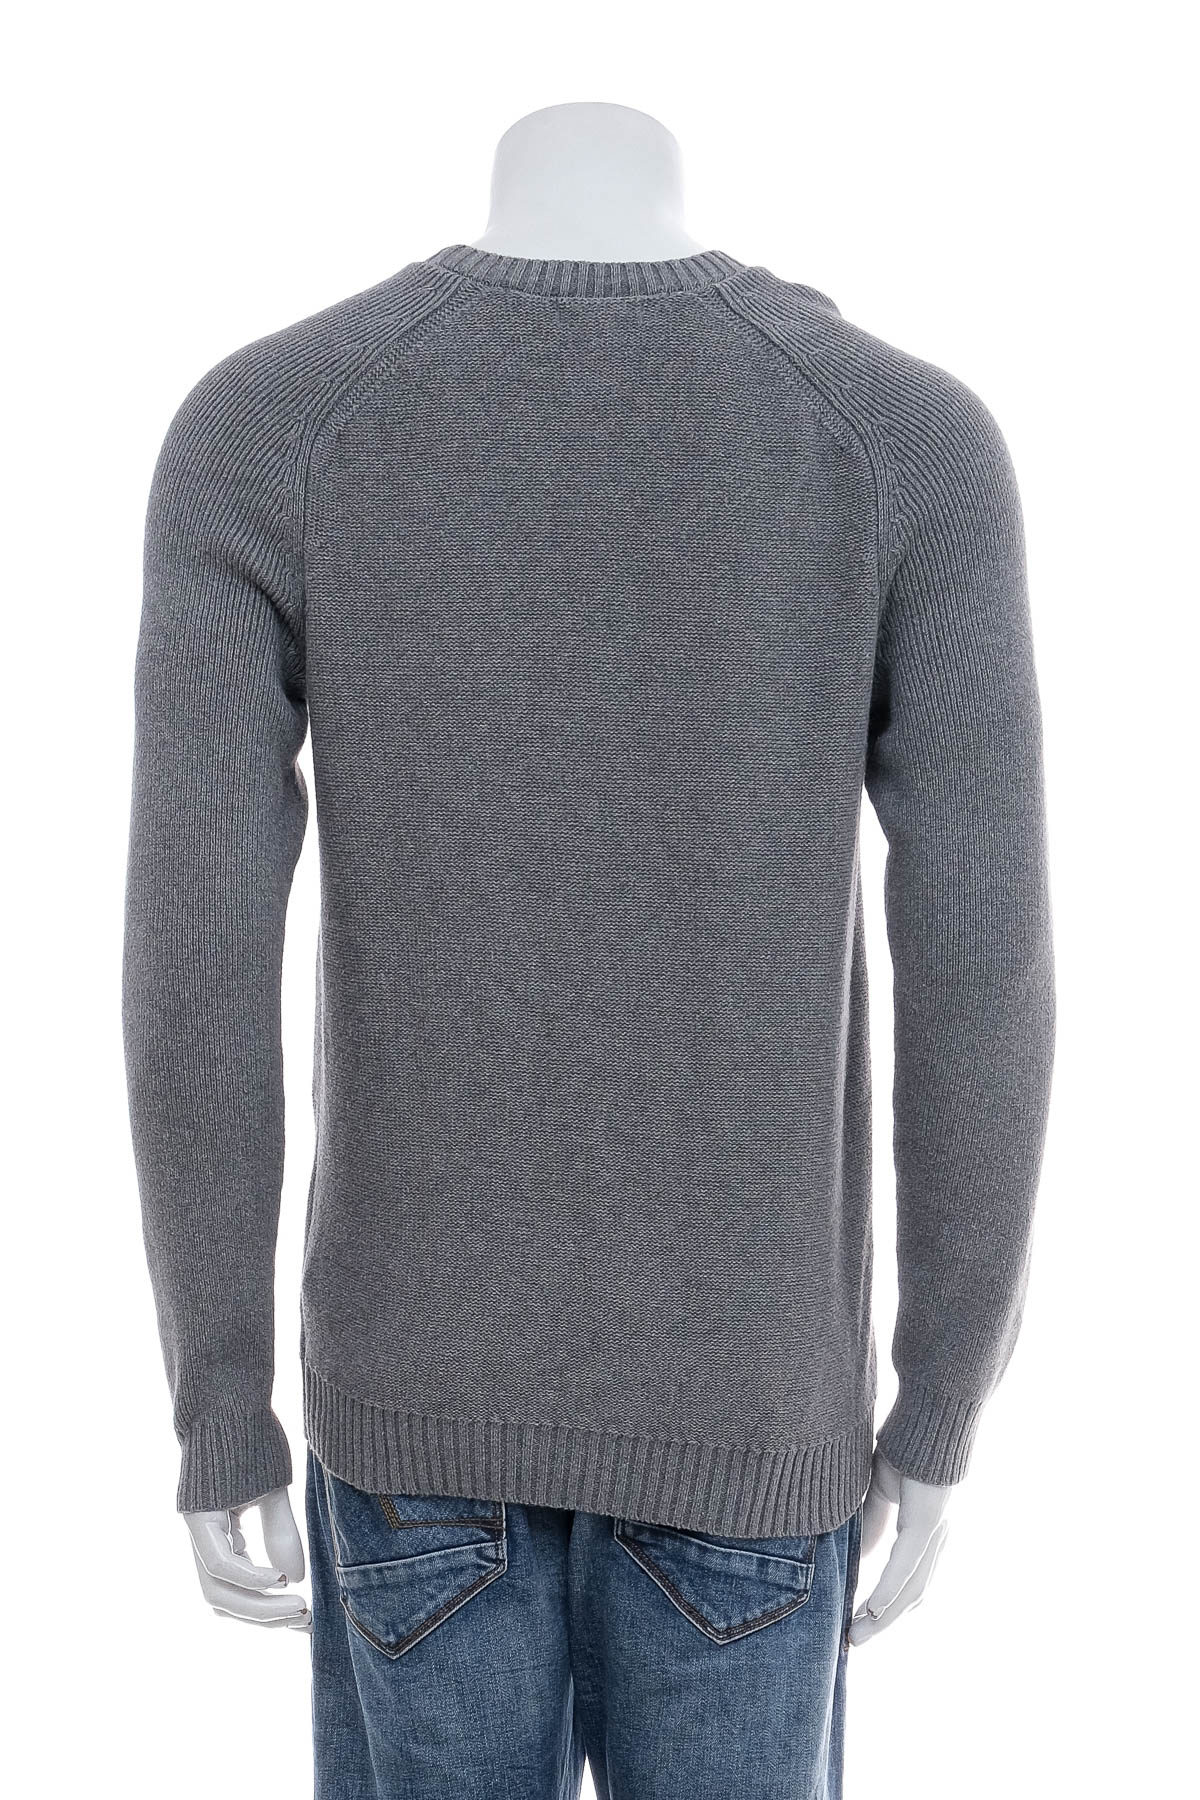 Men's sweater - Gap - 1